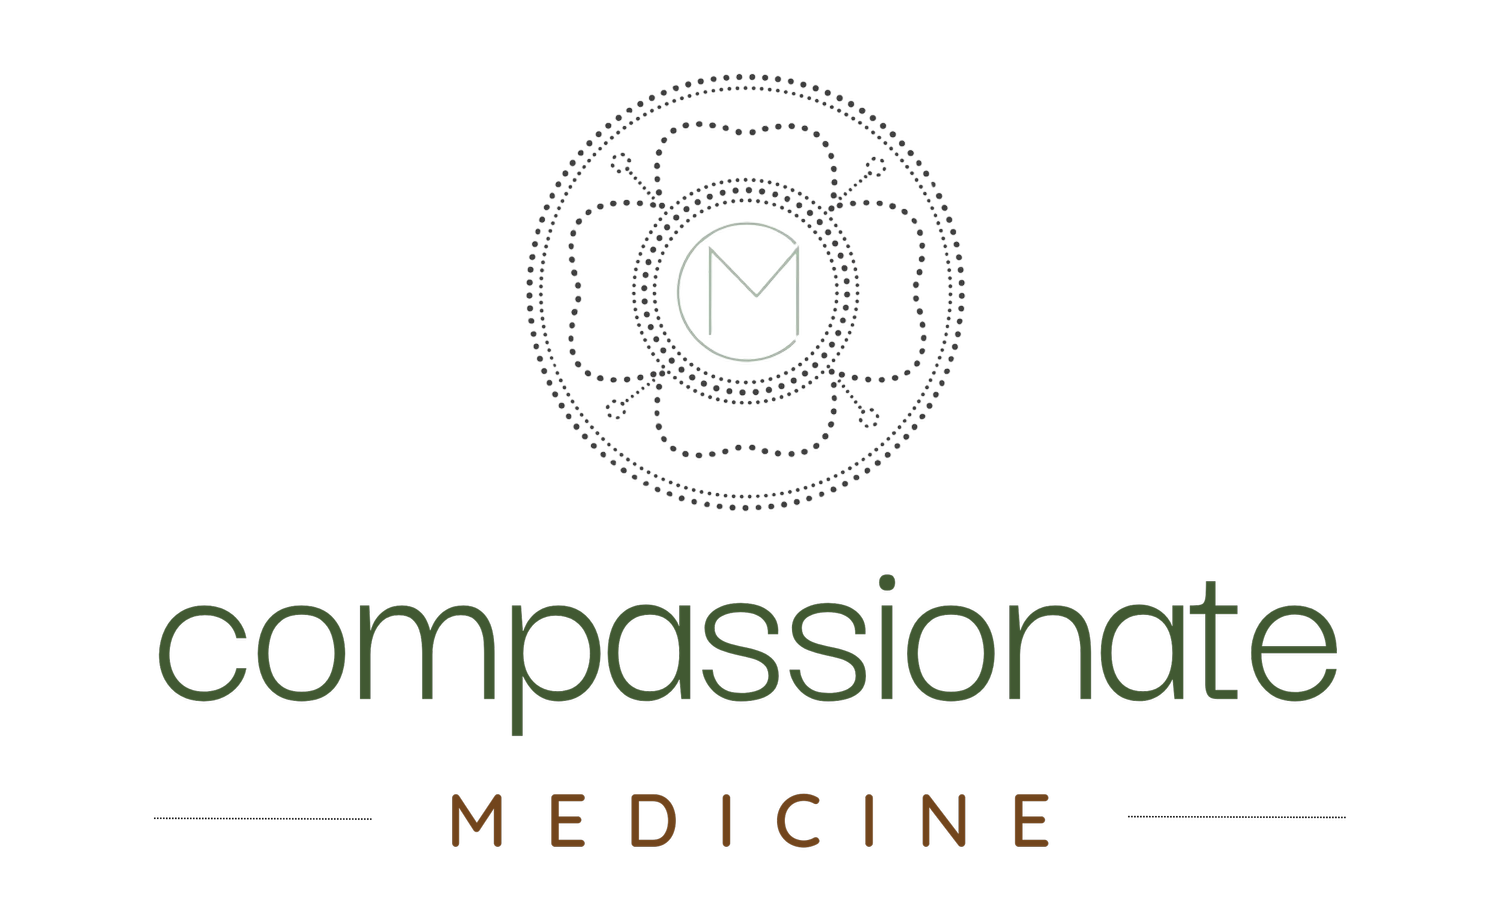 Compassionate Medicine